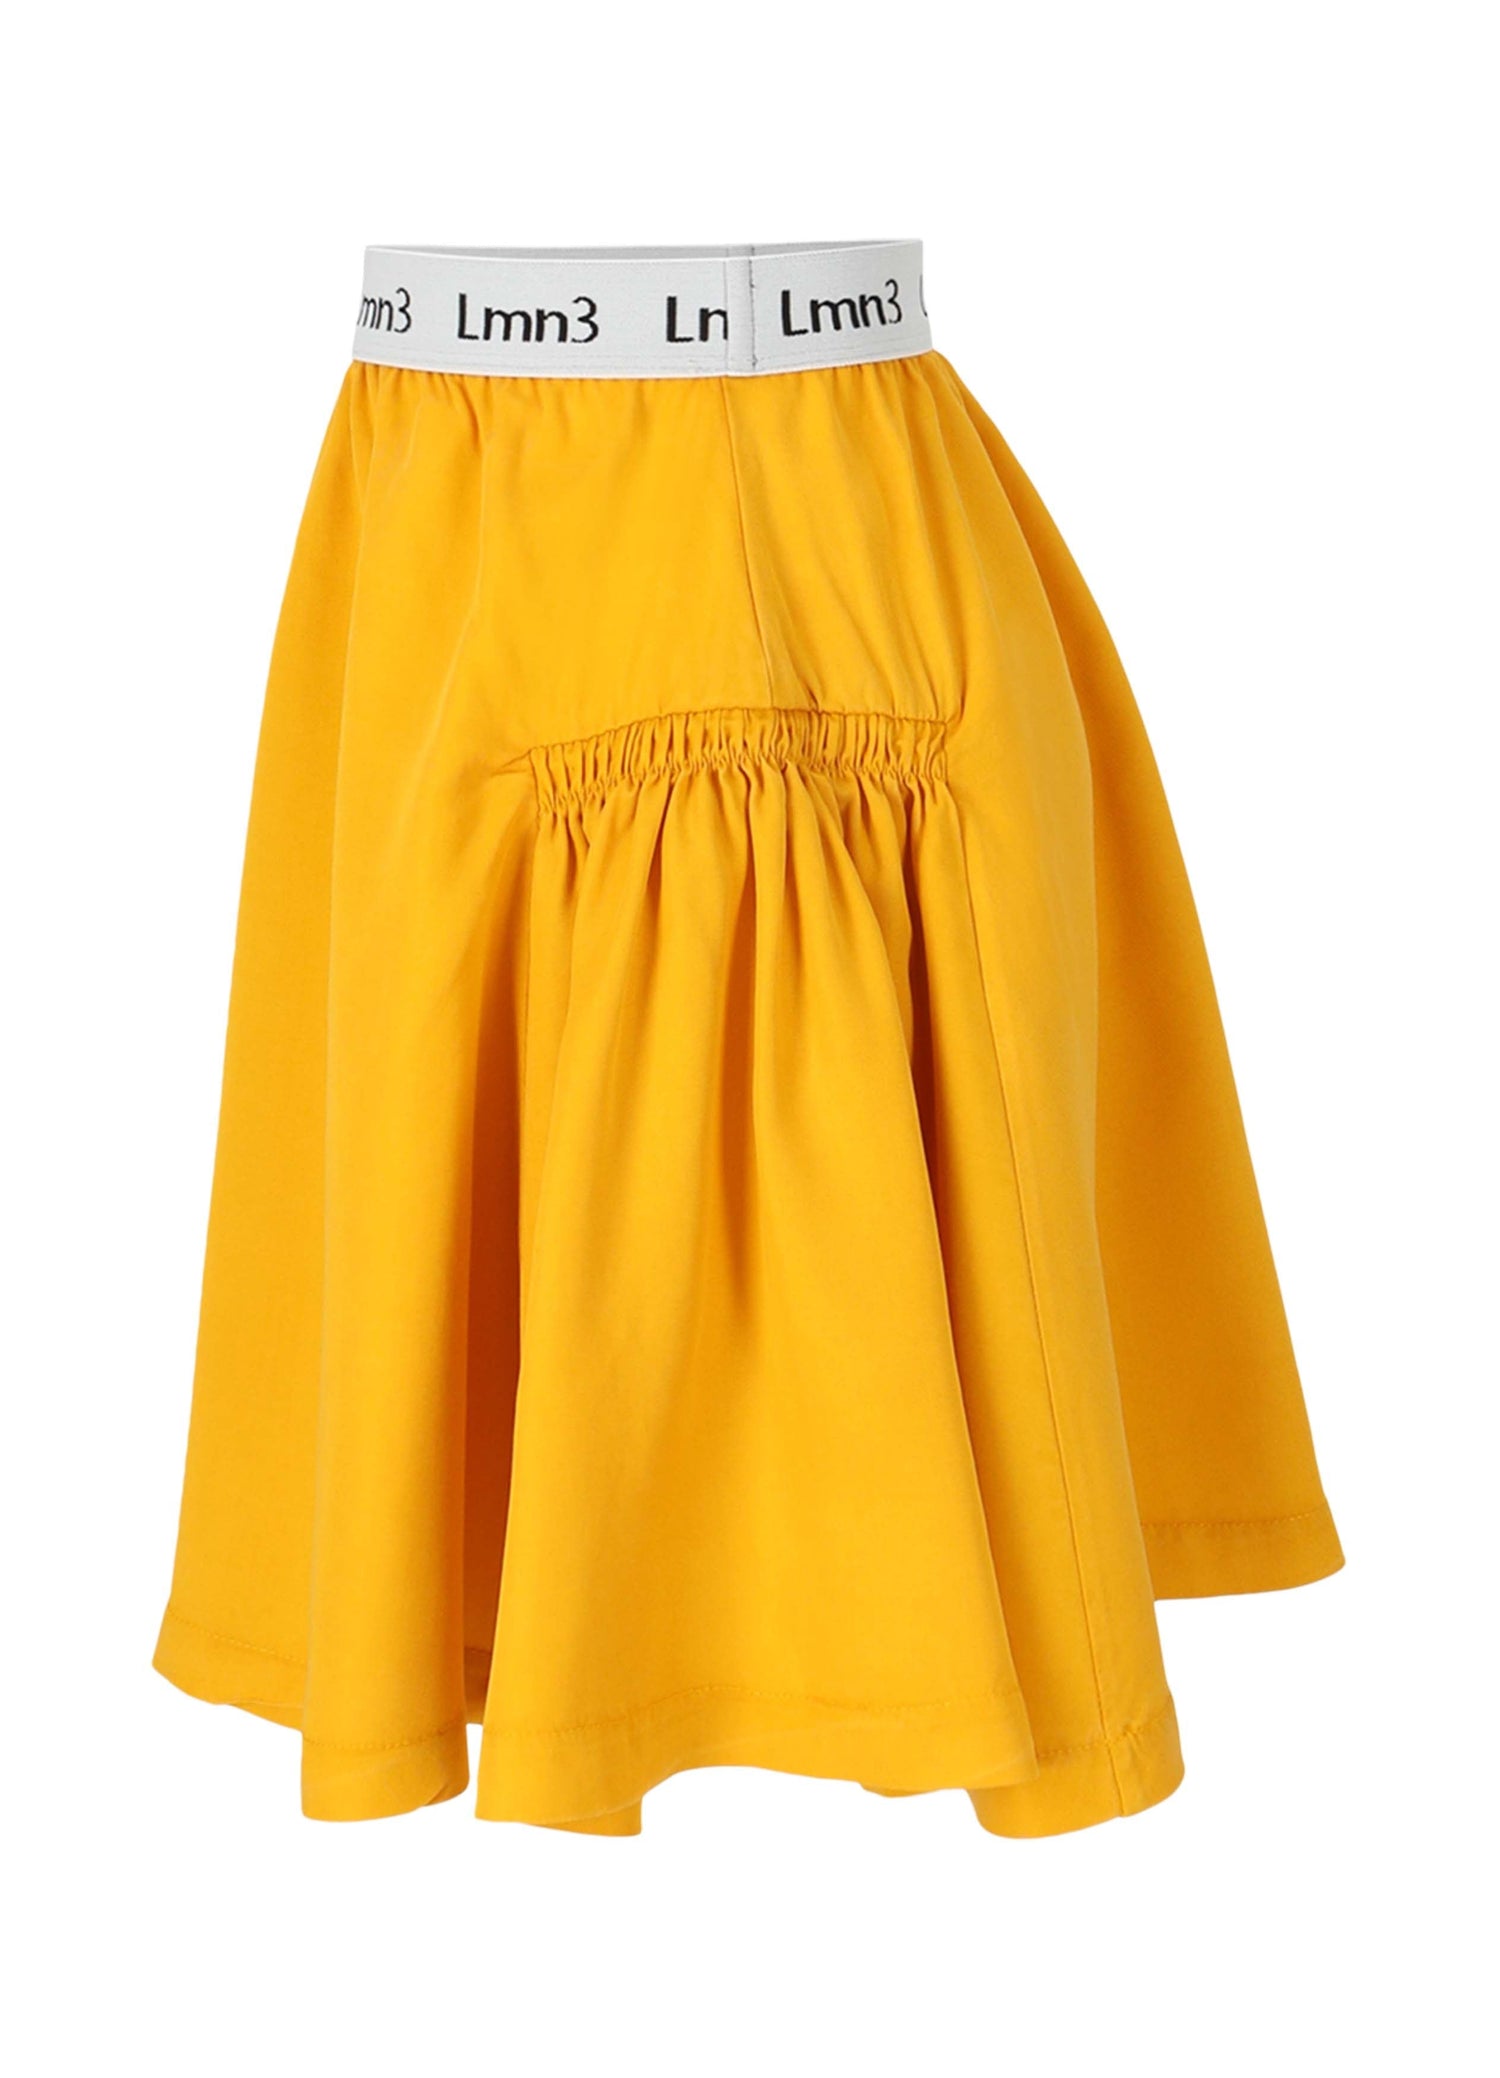 Skirt No. 8 - Mineral Yellow Skirts LMN3 